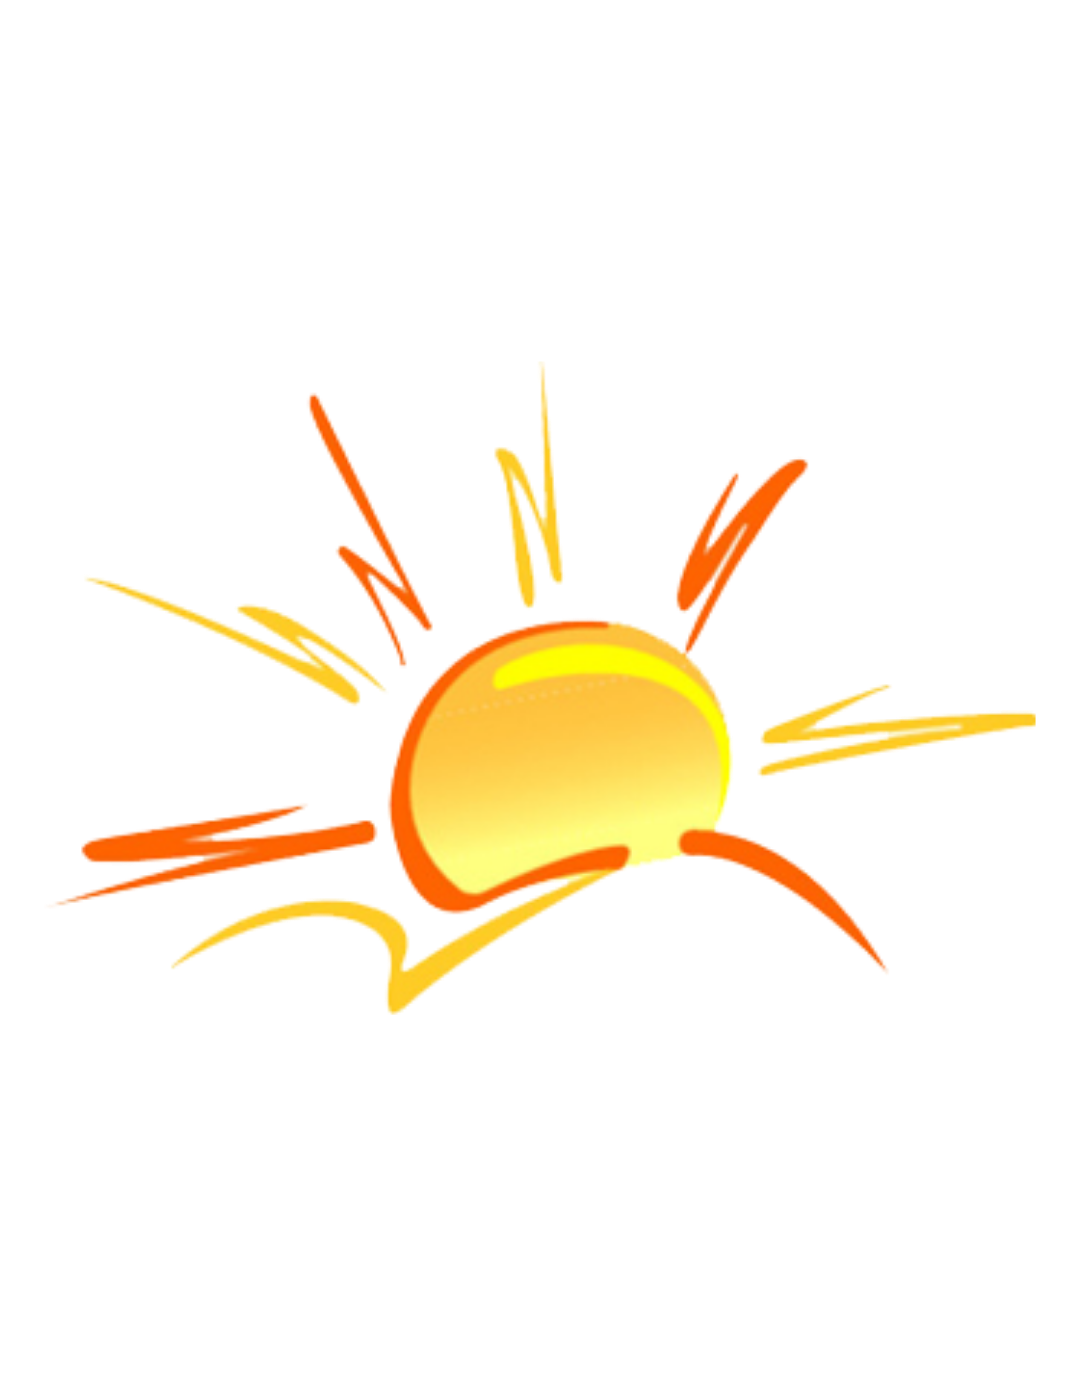 На солнце в доле. Солнце эмблема. Солнце нарисованное. Логотип солнышко. Лето солнце лагерь.